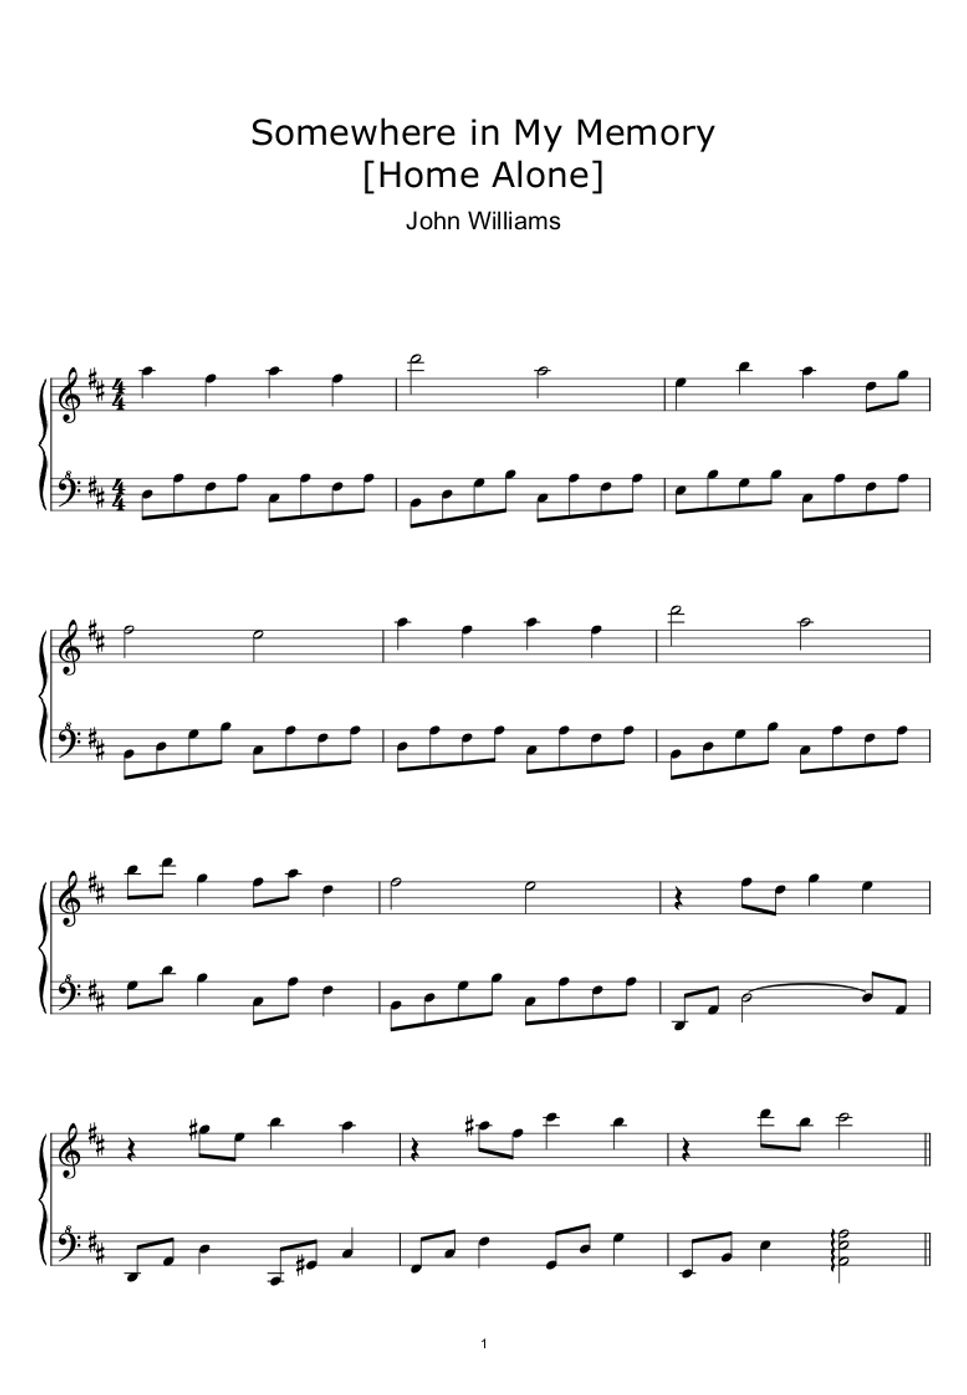 John Williams - Somewhere in My Memory (Home Alone) (Sheet Music, MIDI,) by sayu